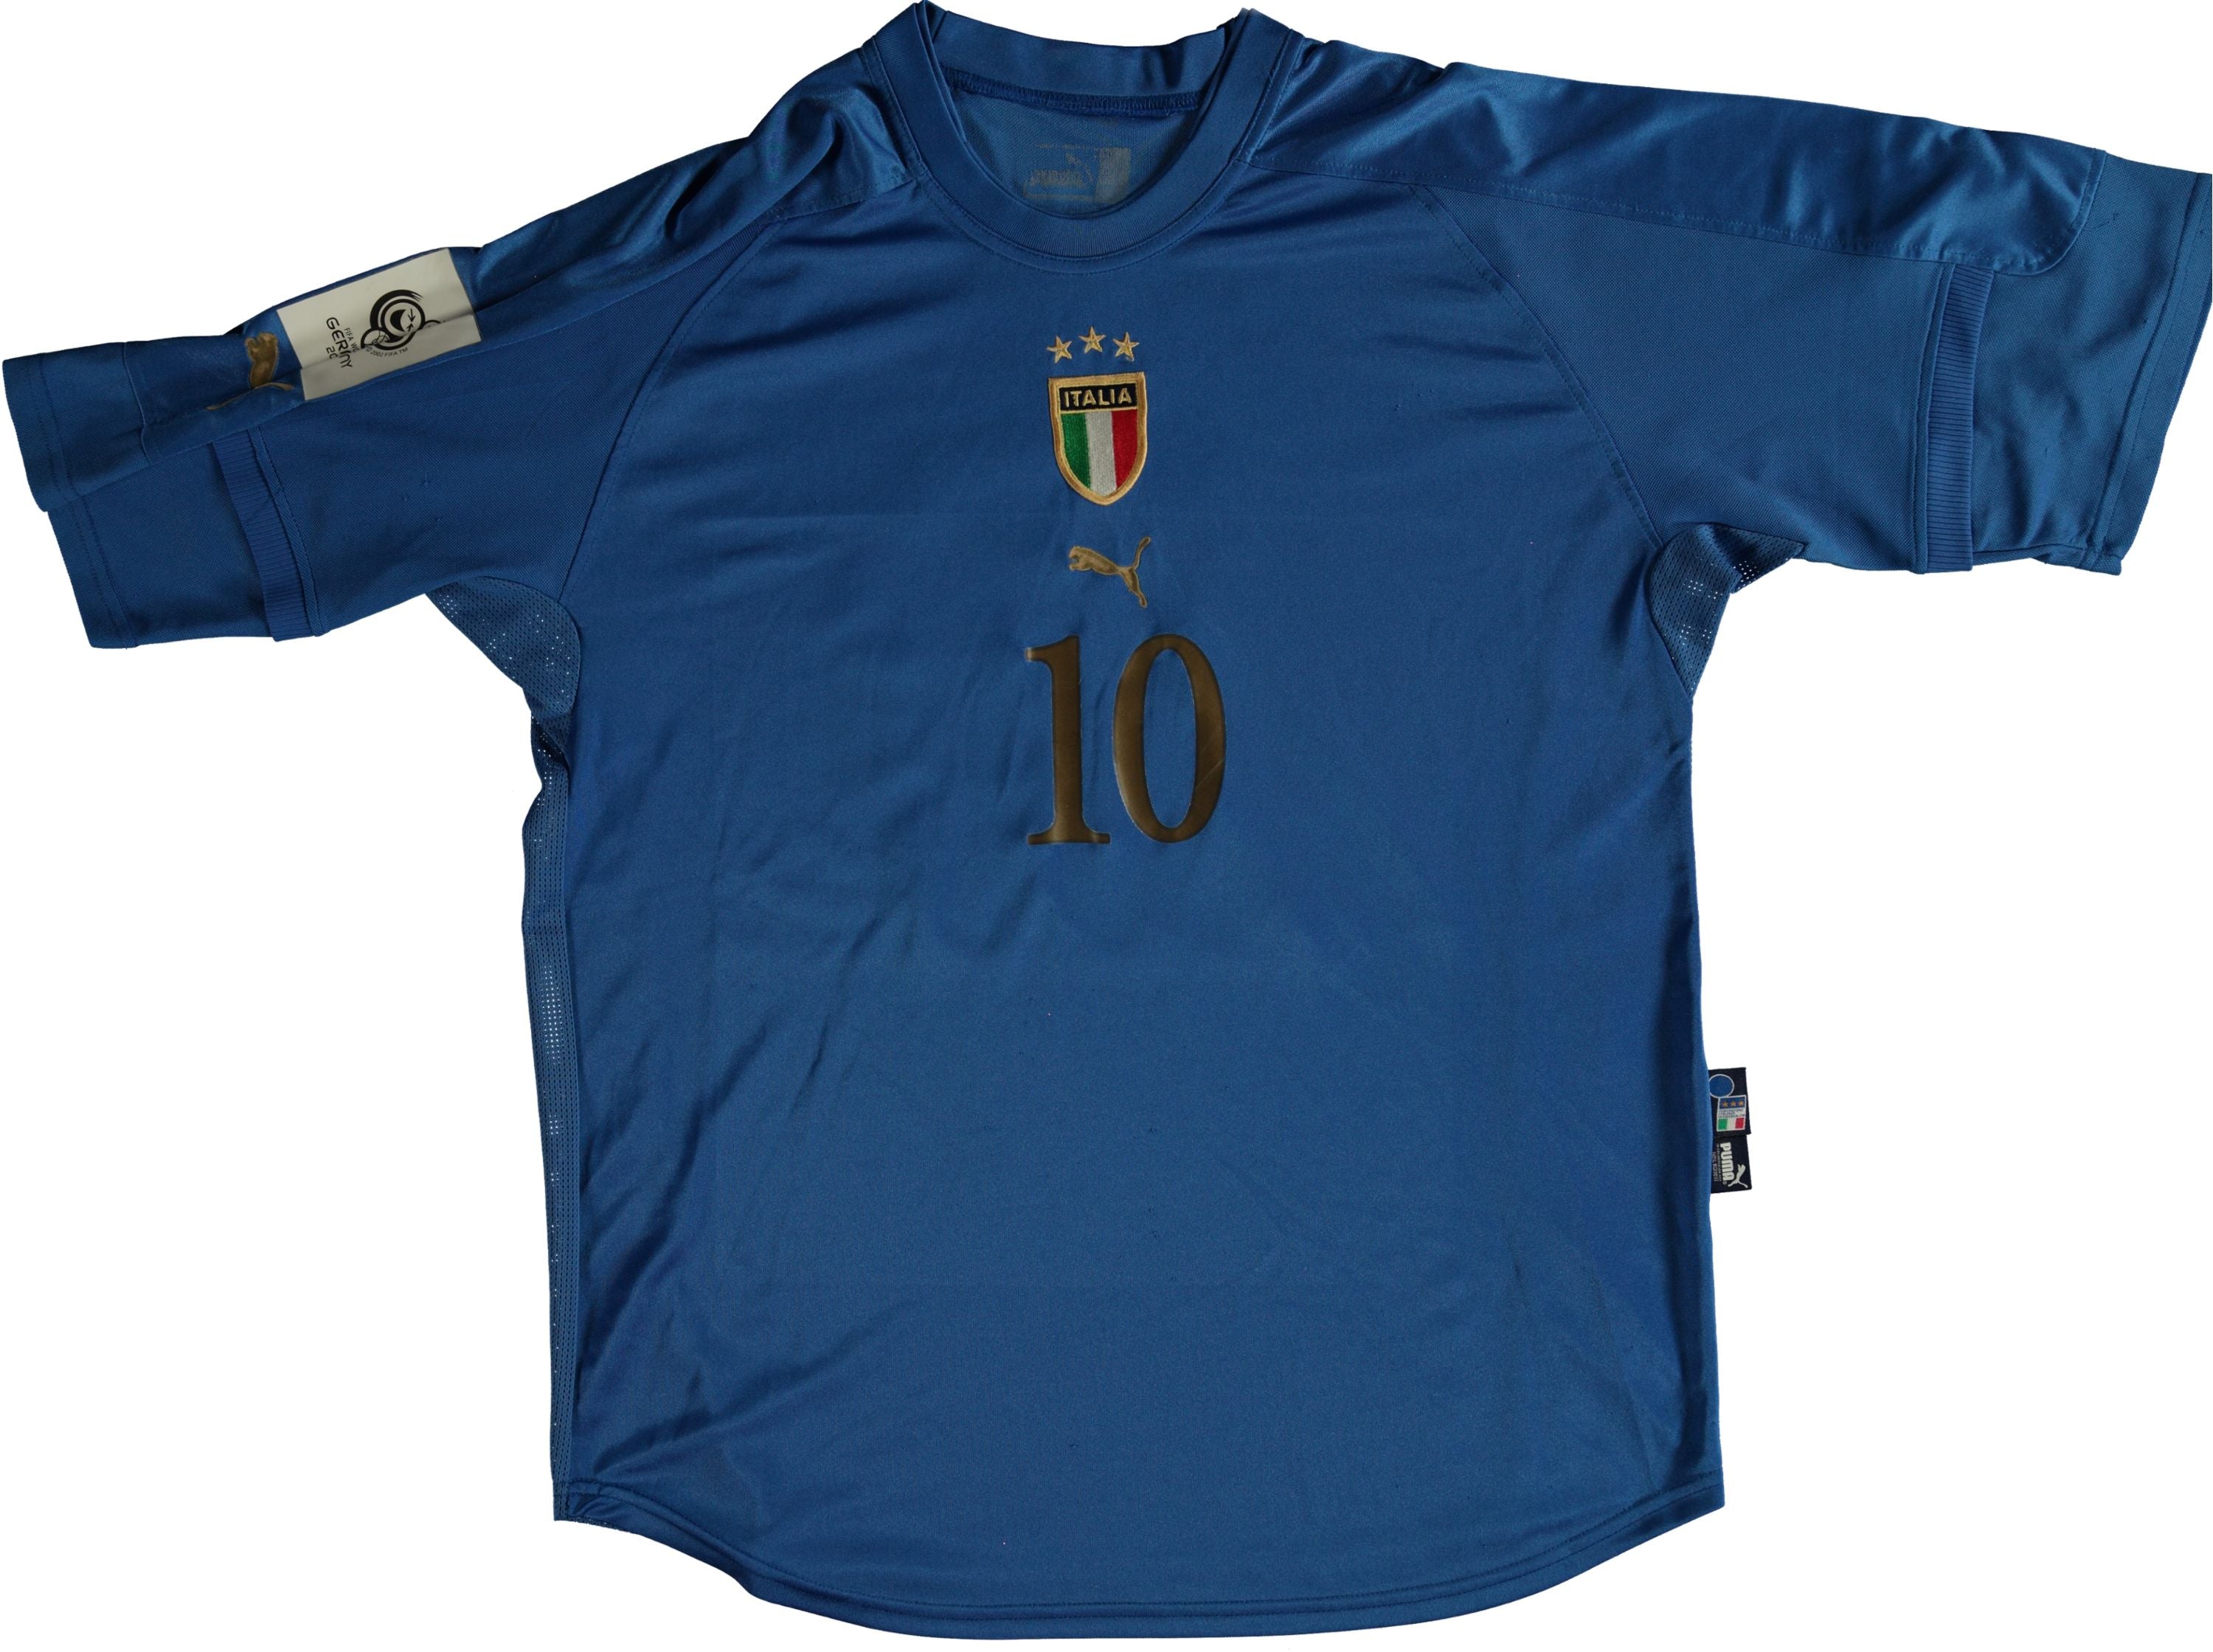 2005-06 Italy Home Shirt Francesco Totti (XL)